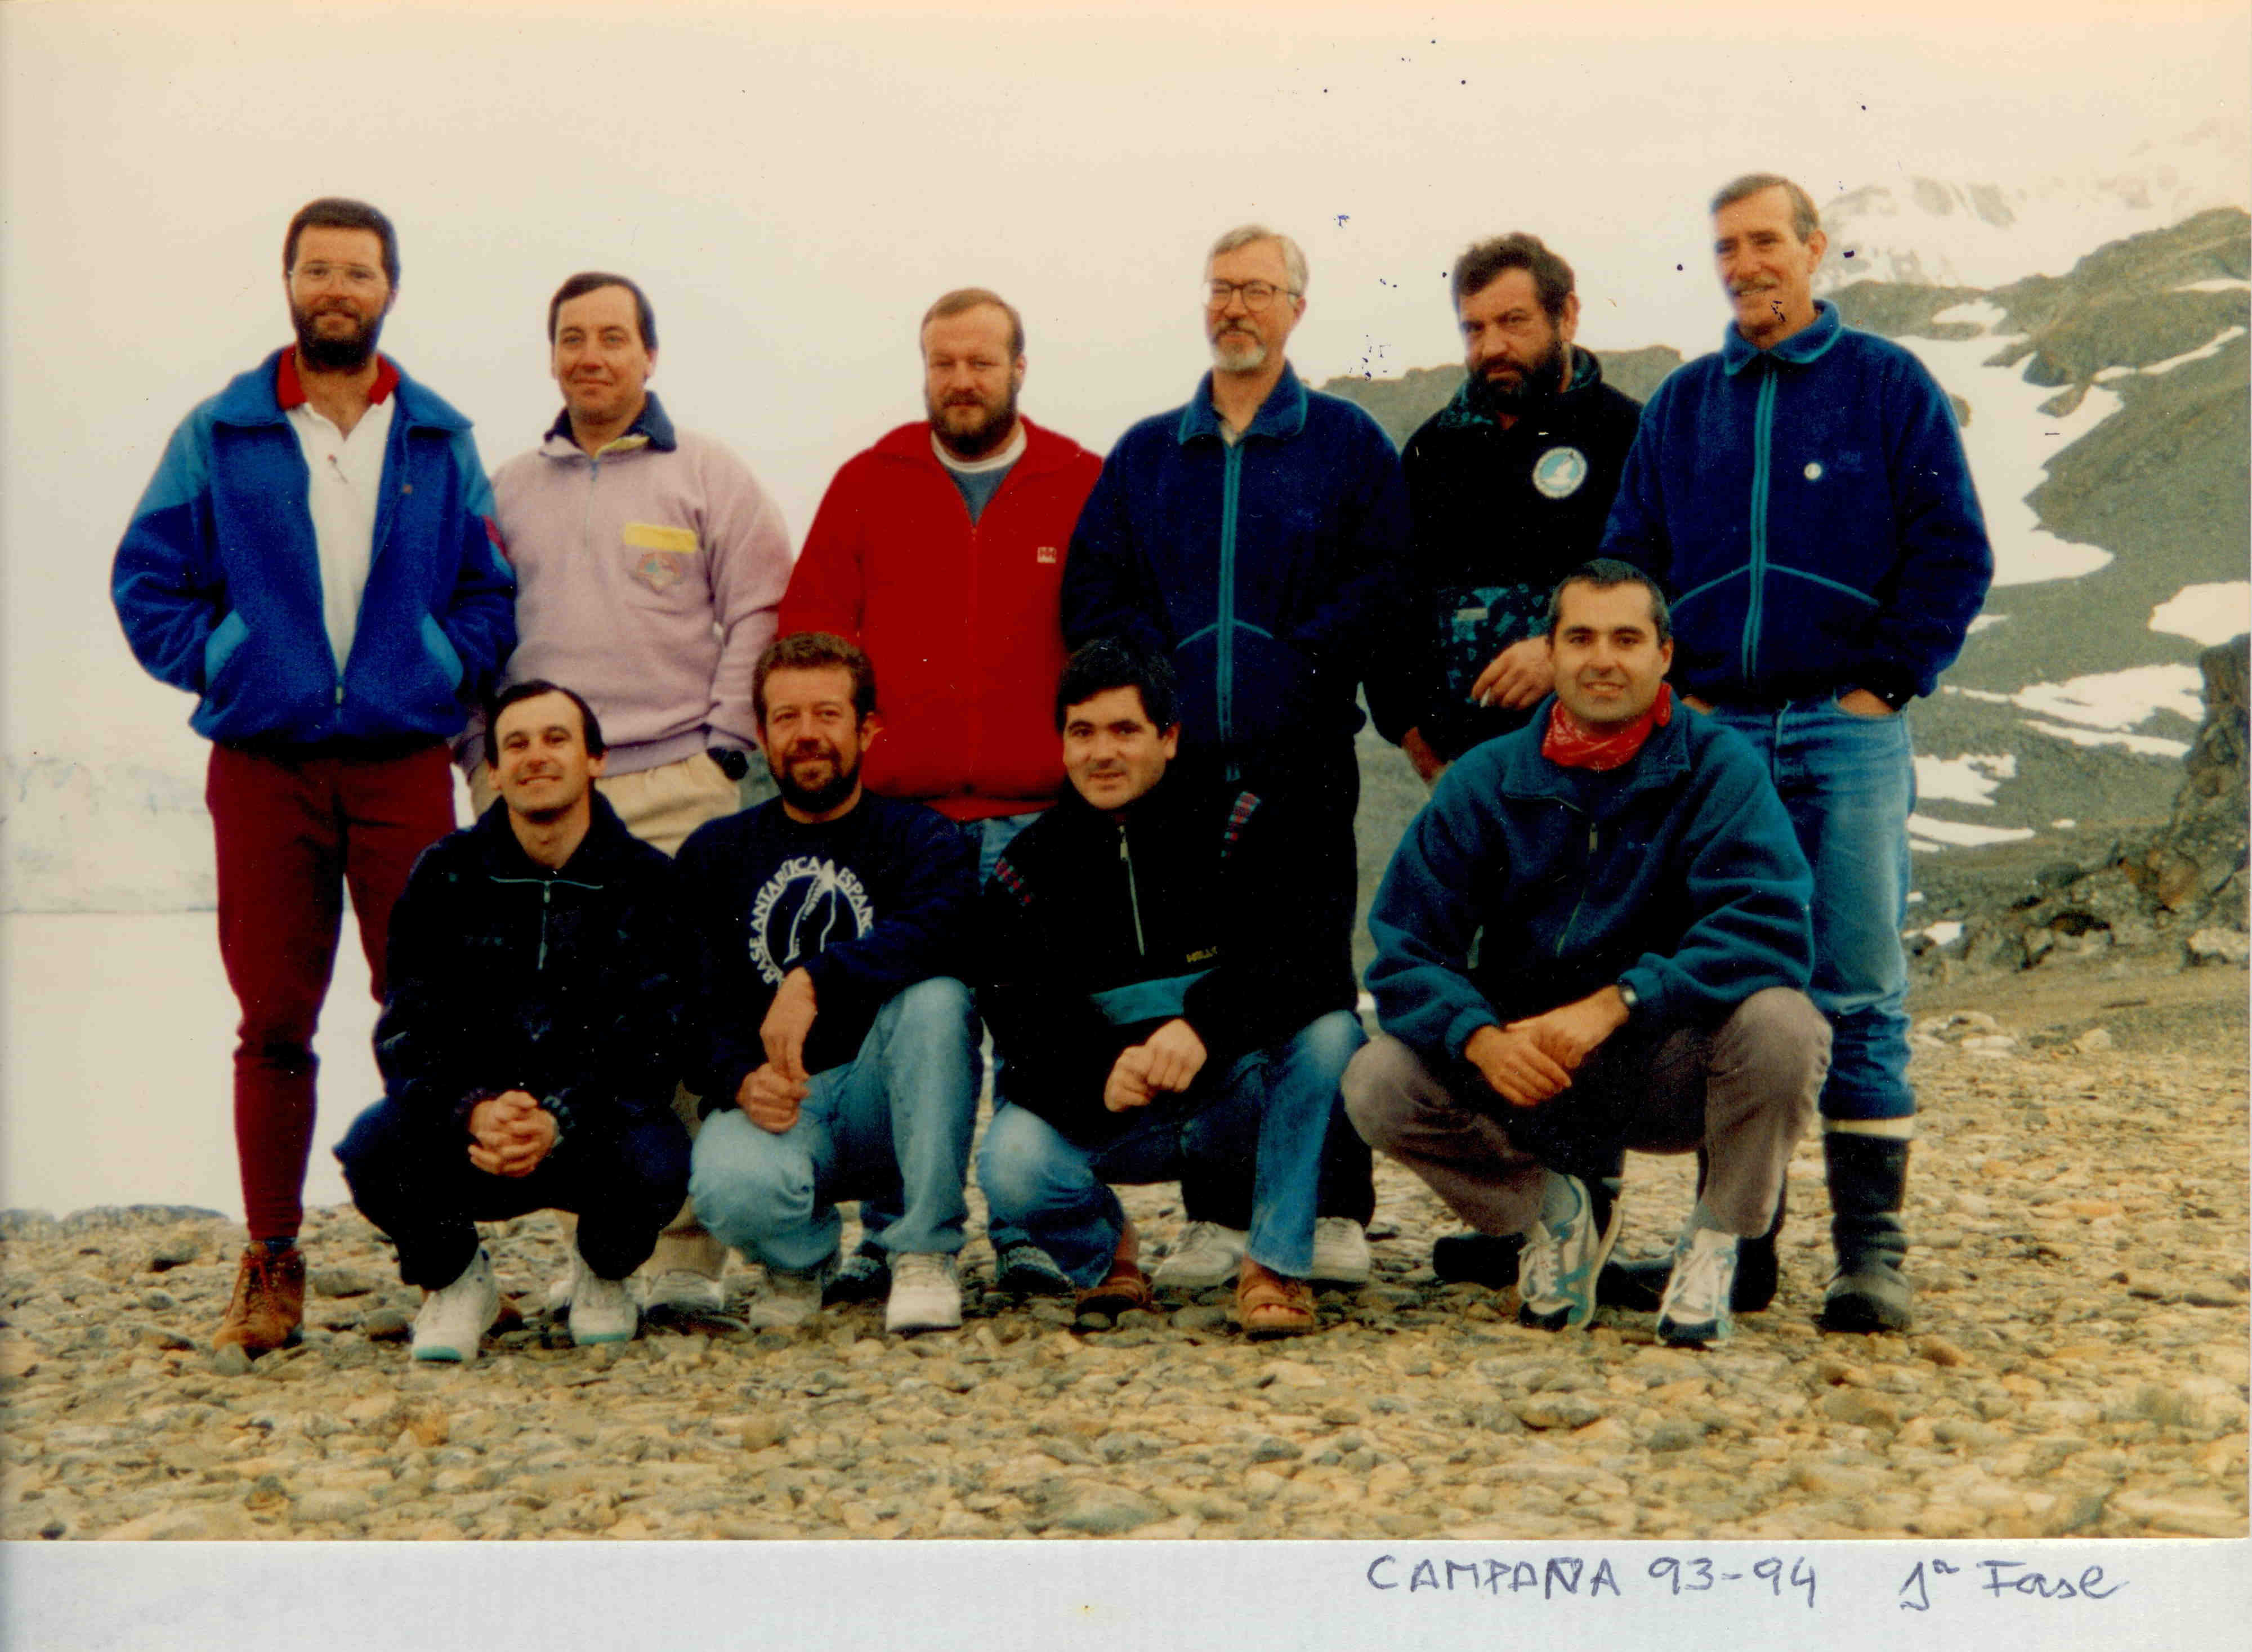 Foto Oficial 1993-1994 1ª Fase.jpg 